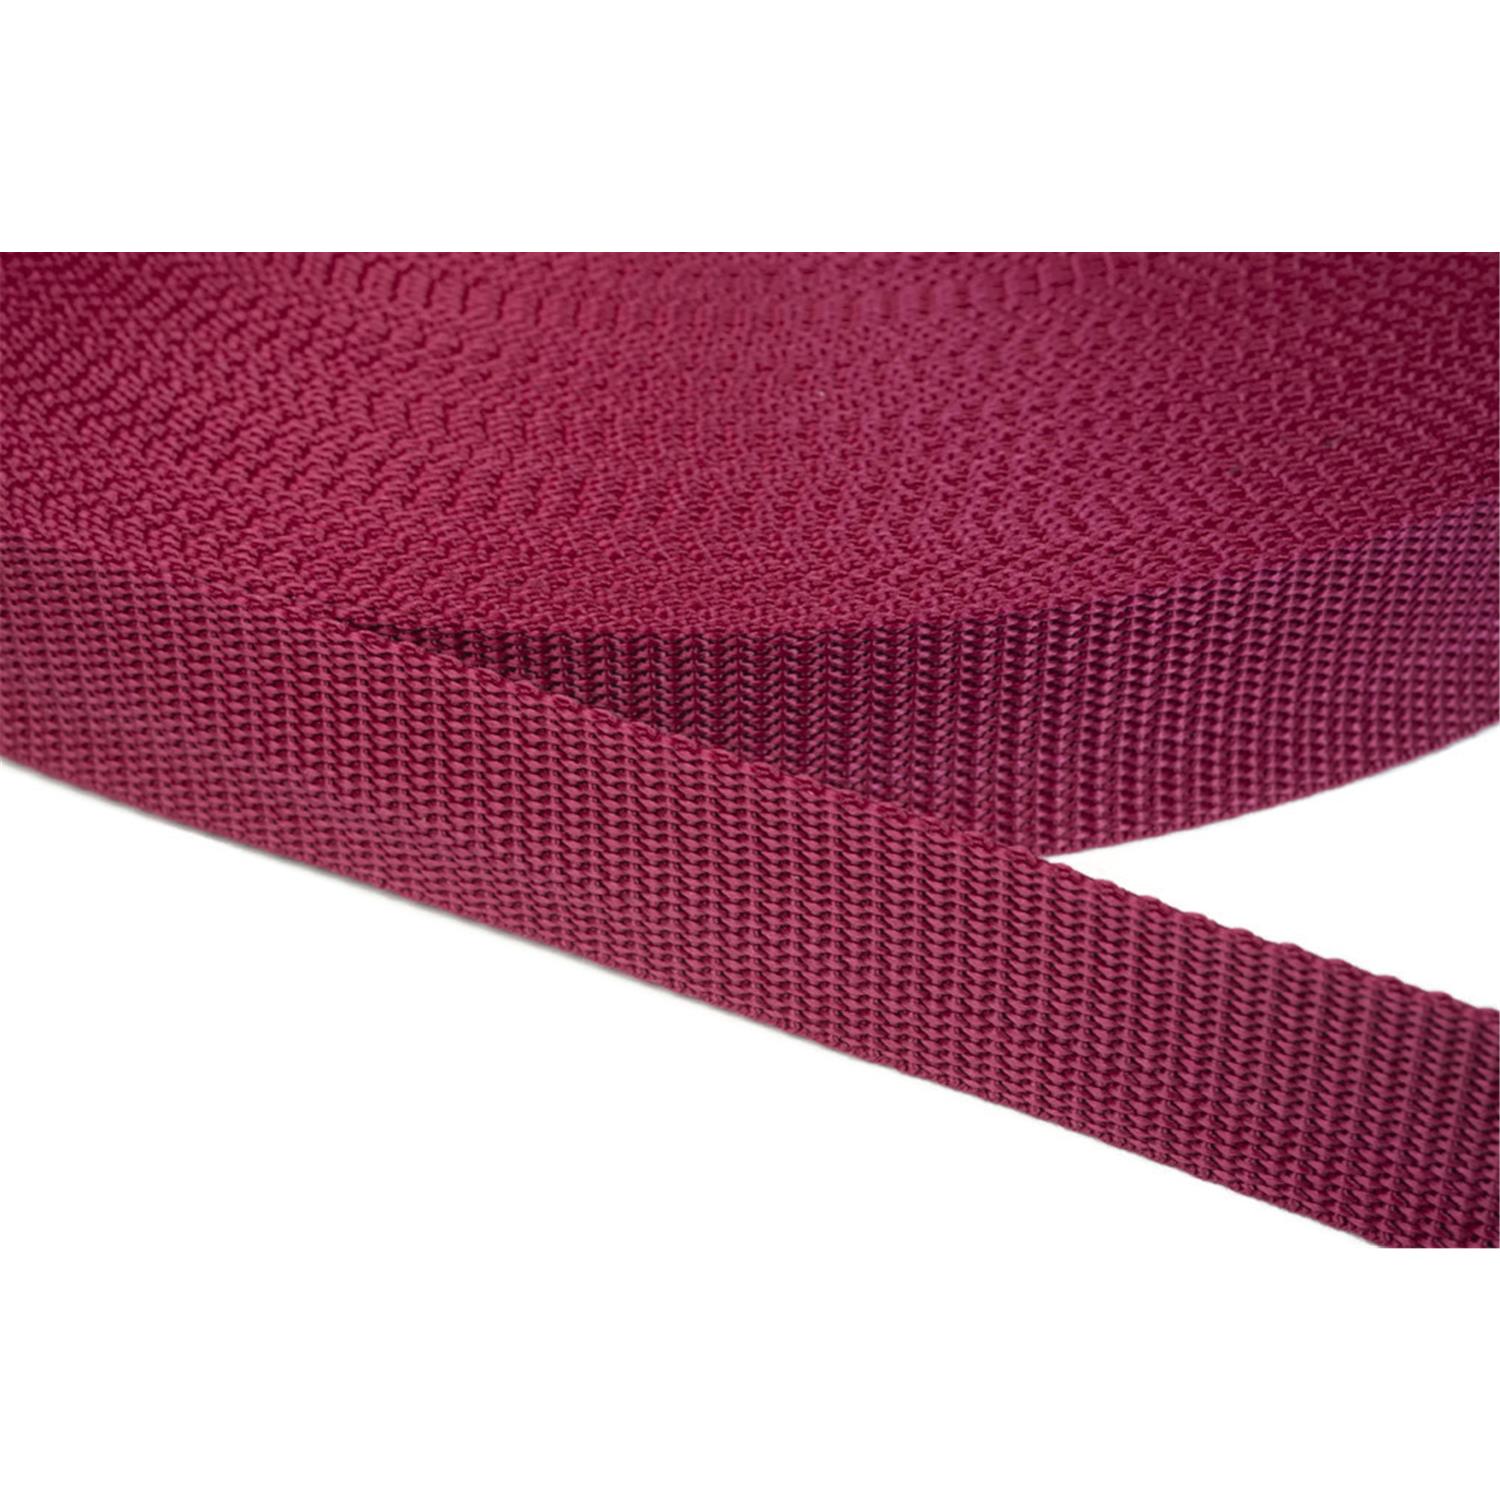 Gurtband 10mm breit aus Polypropylen in 41 Farben 21 - dunkelrot 12 Meter